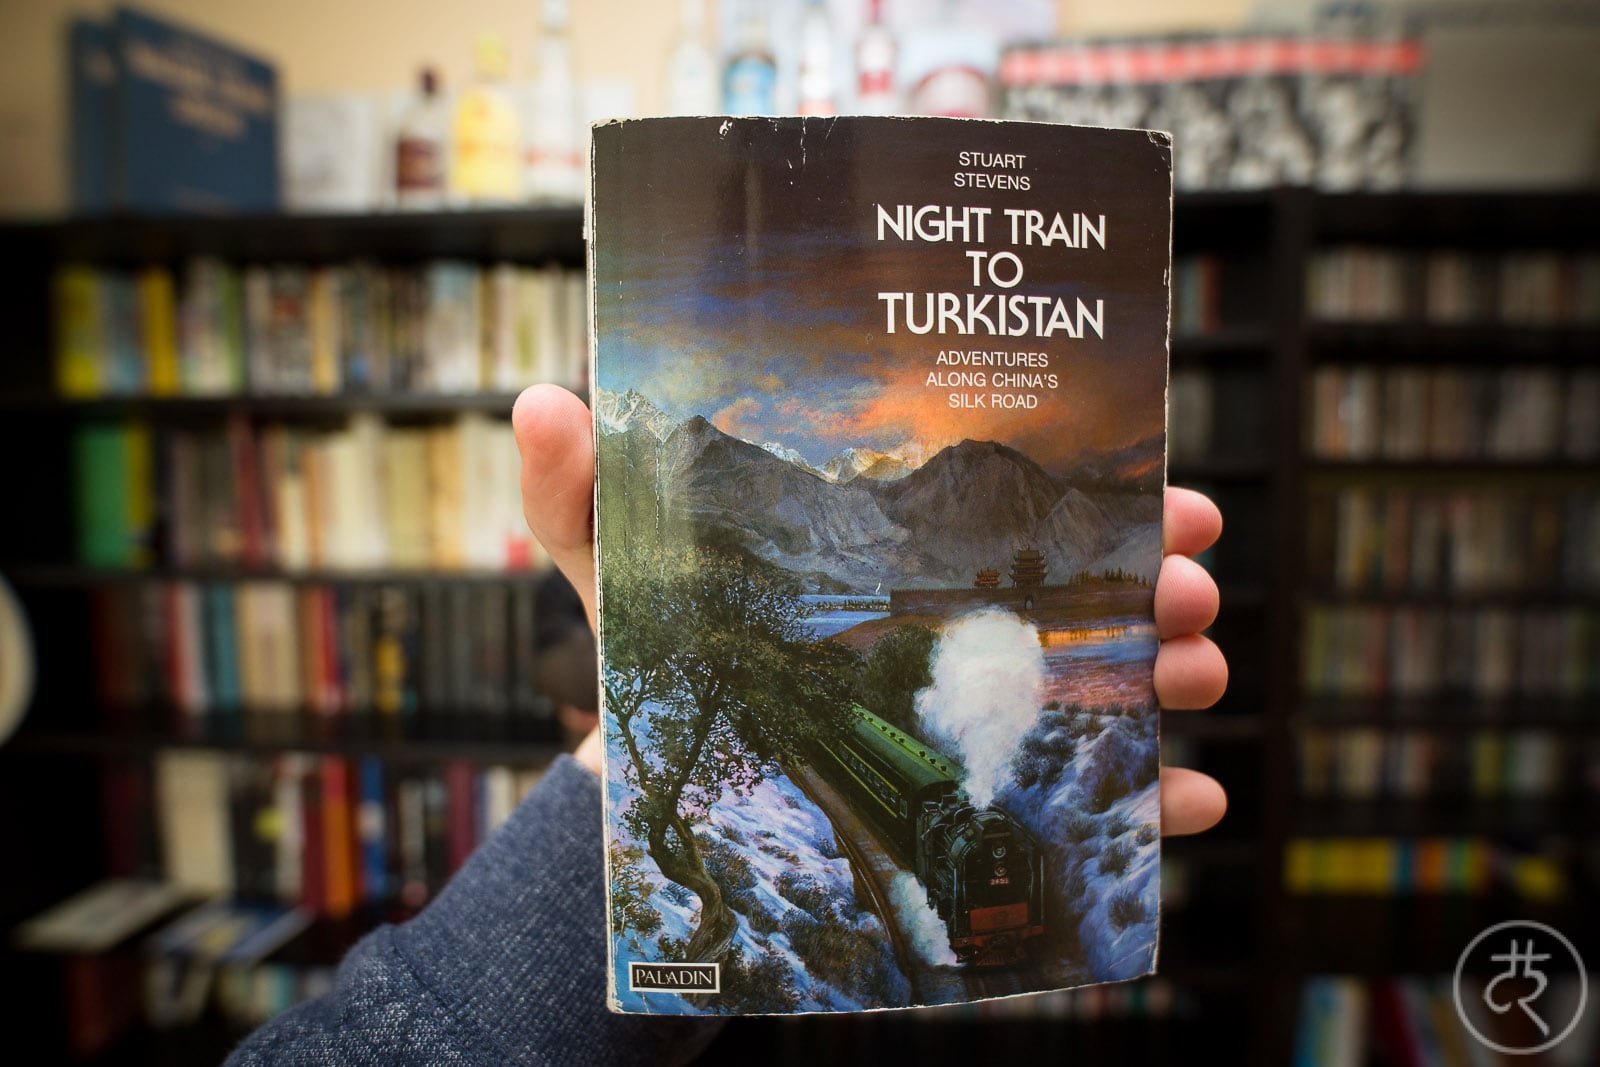 Stuart Stevens' "Night Train to Turkistan"